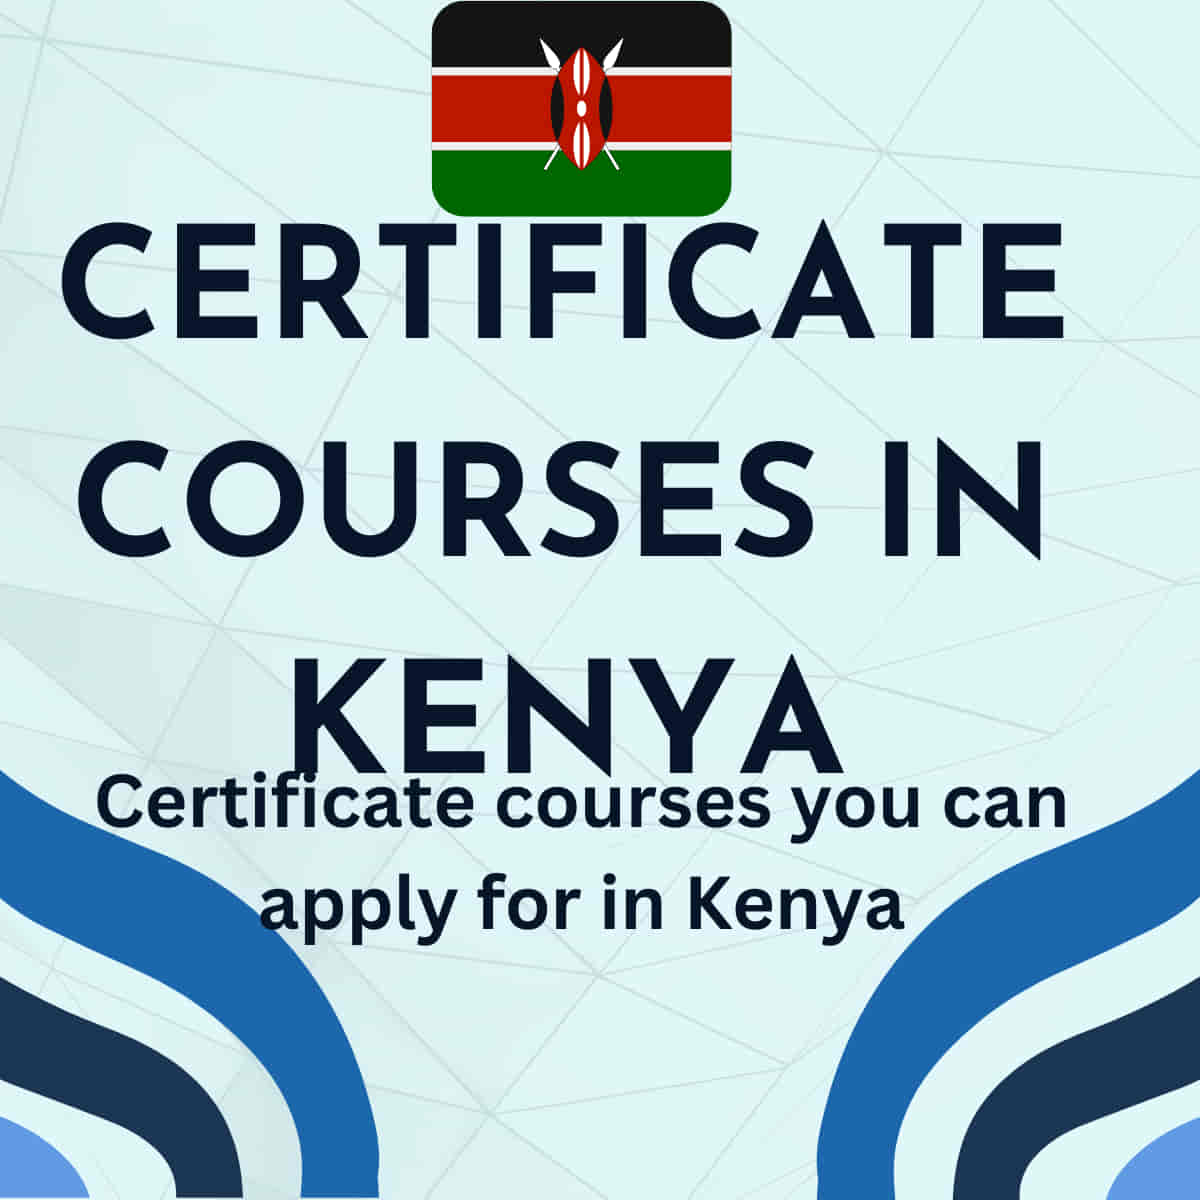 Certificate courses in Kenya